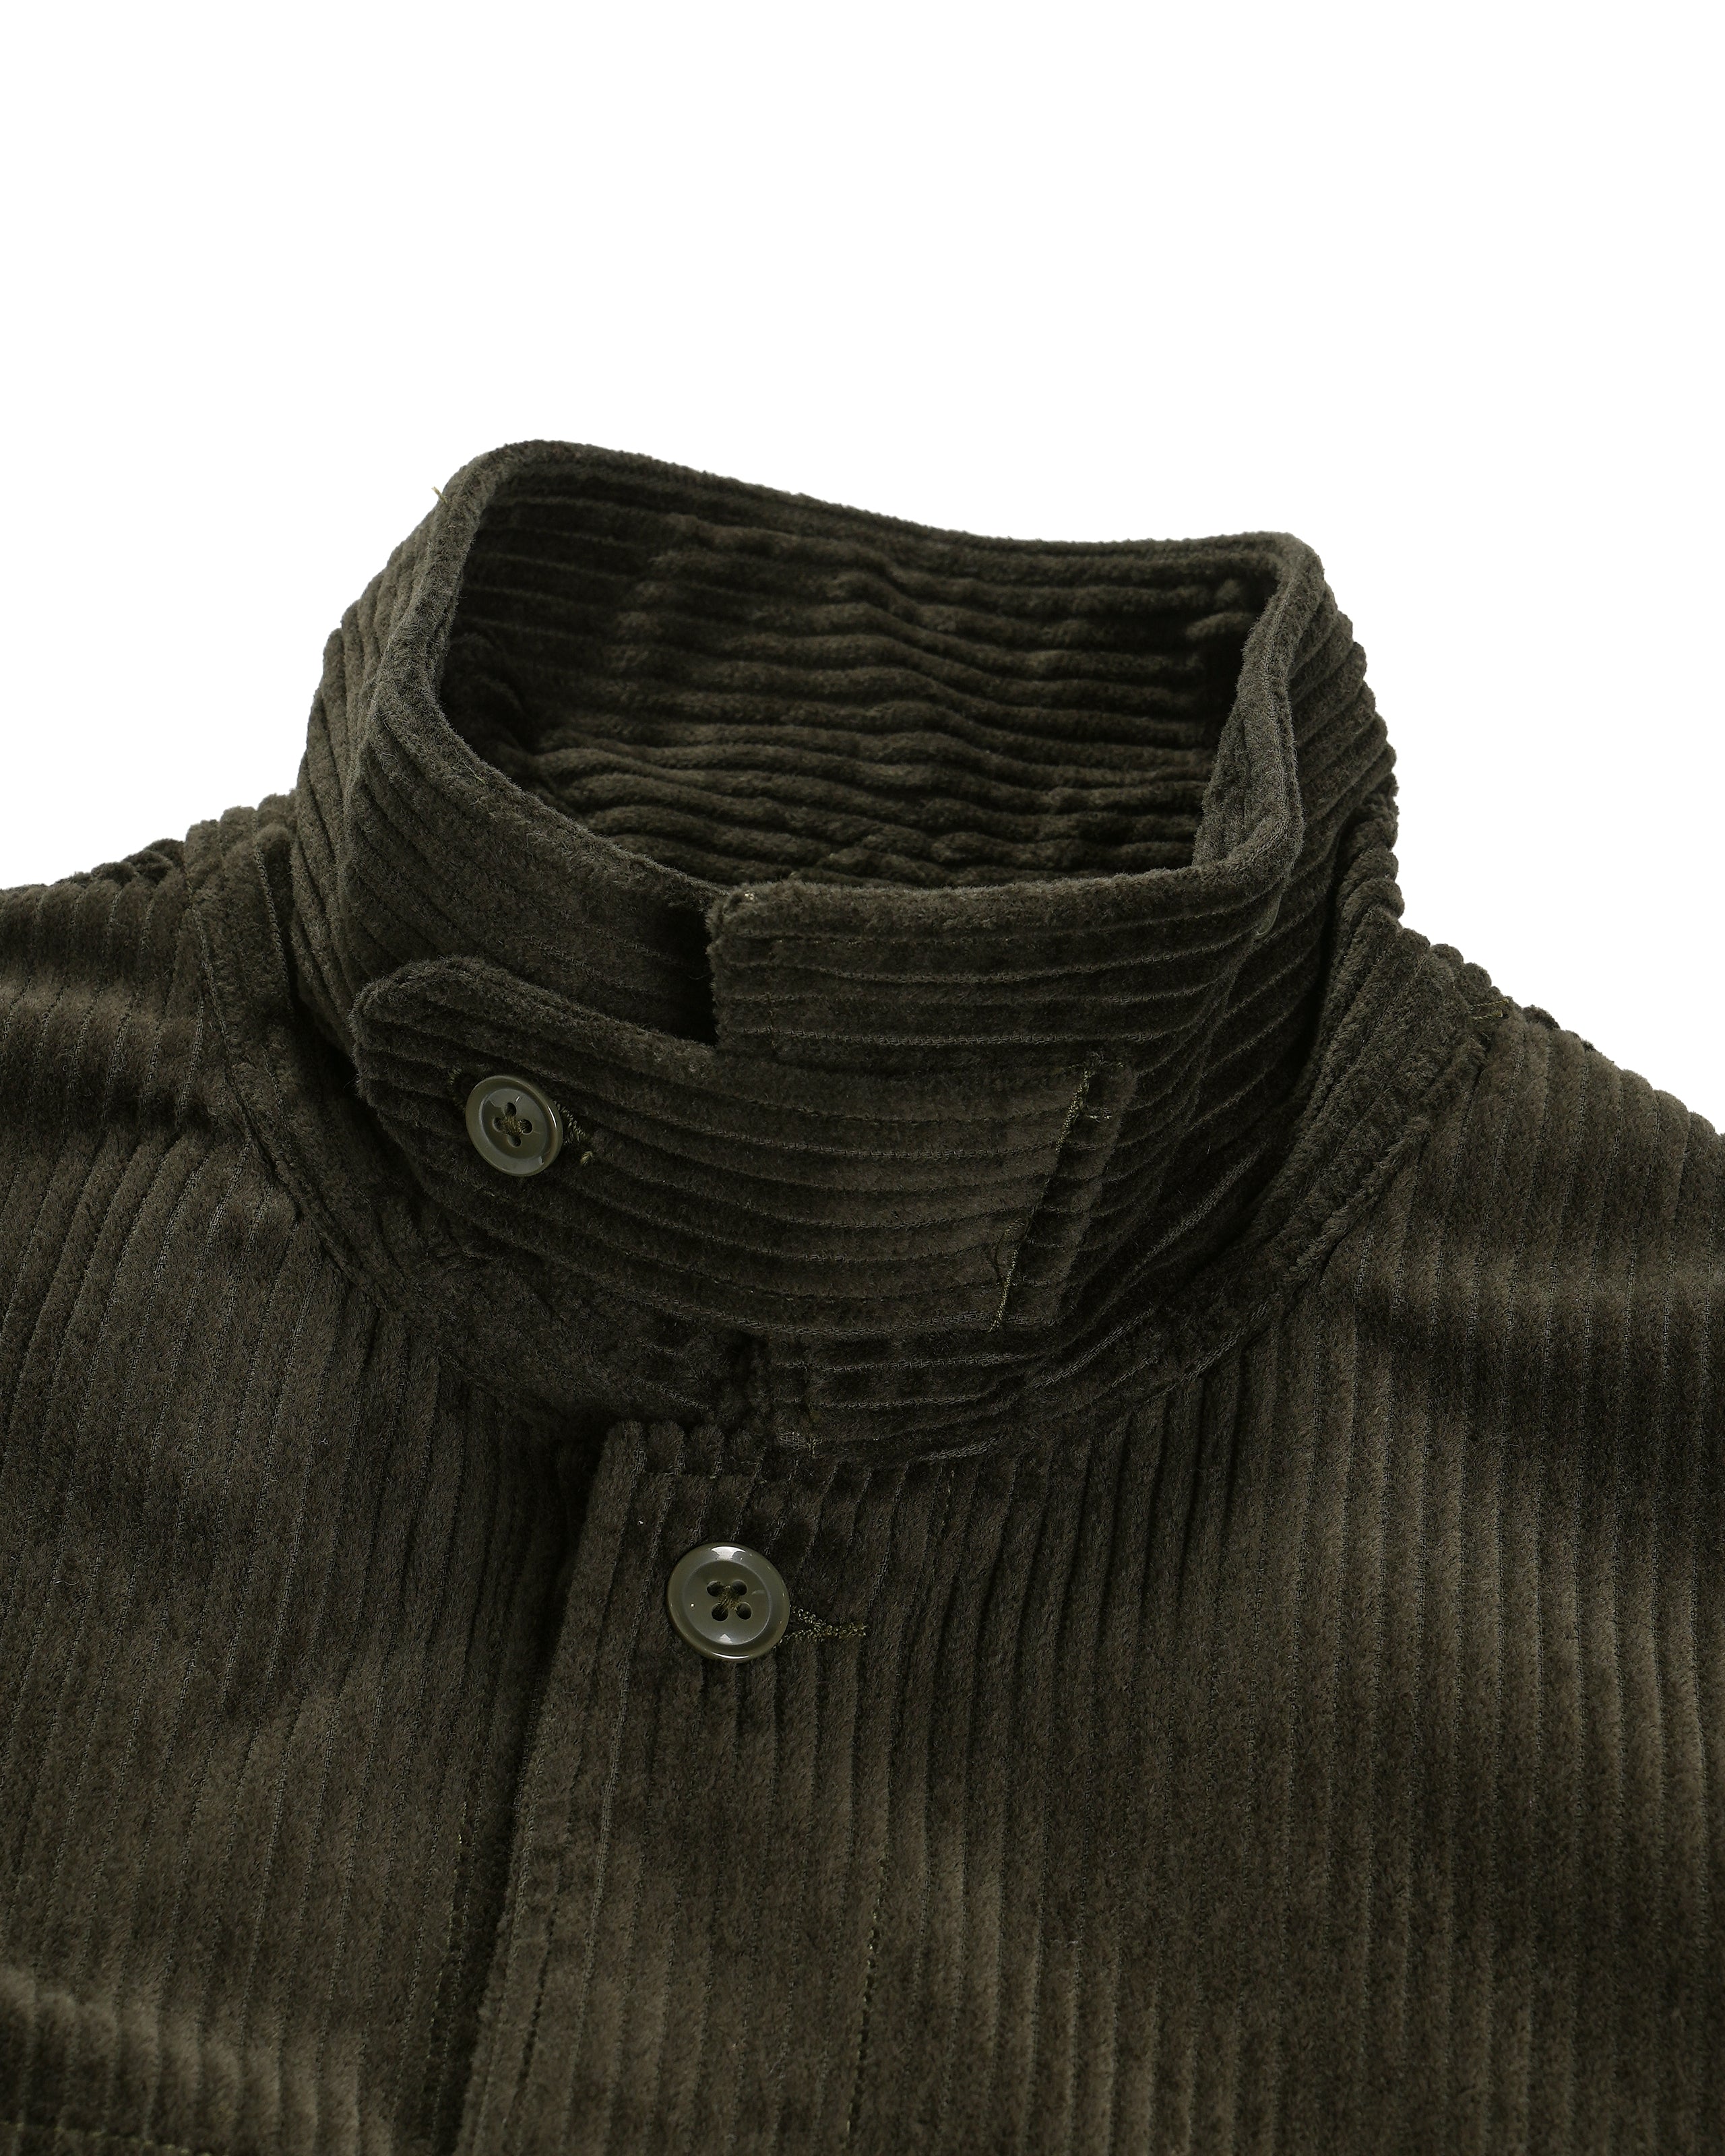 Suffolk Shirt Jacket - Olive Cotton 4.5W Corduroy